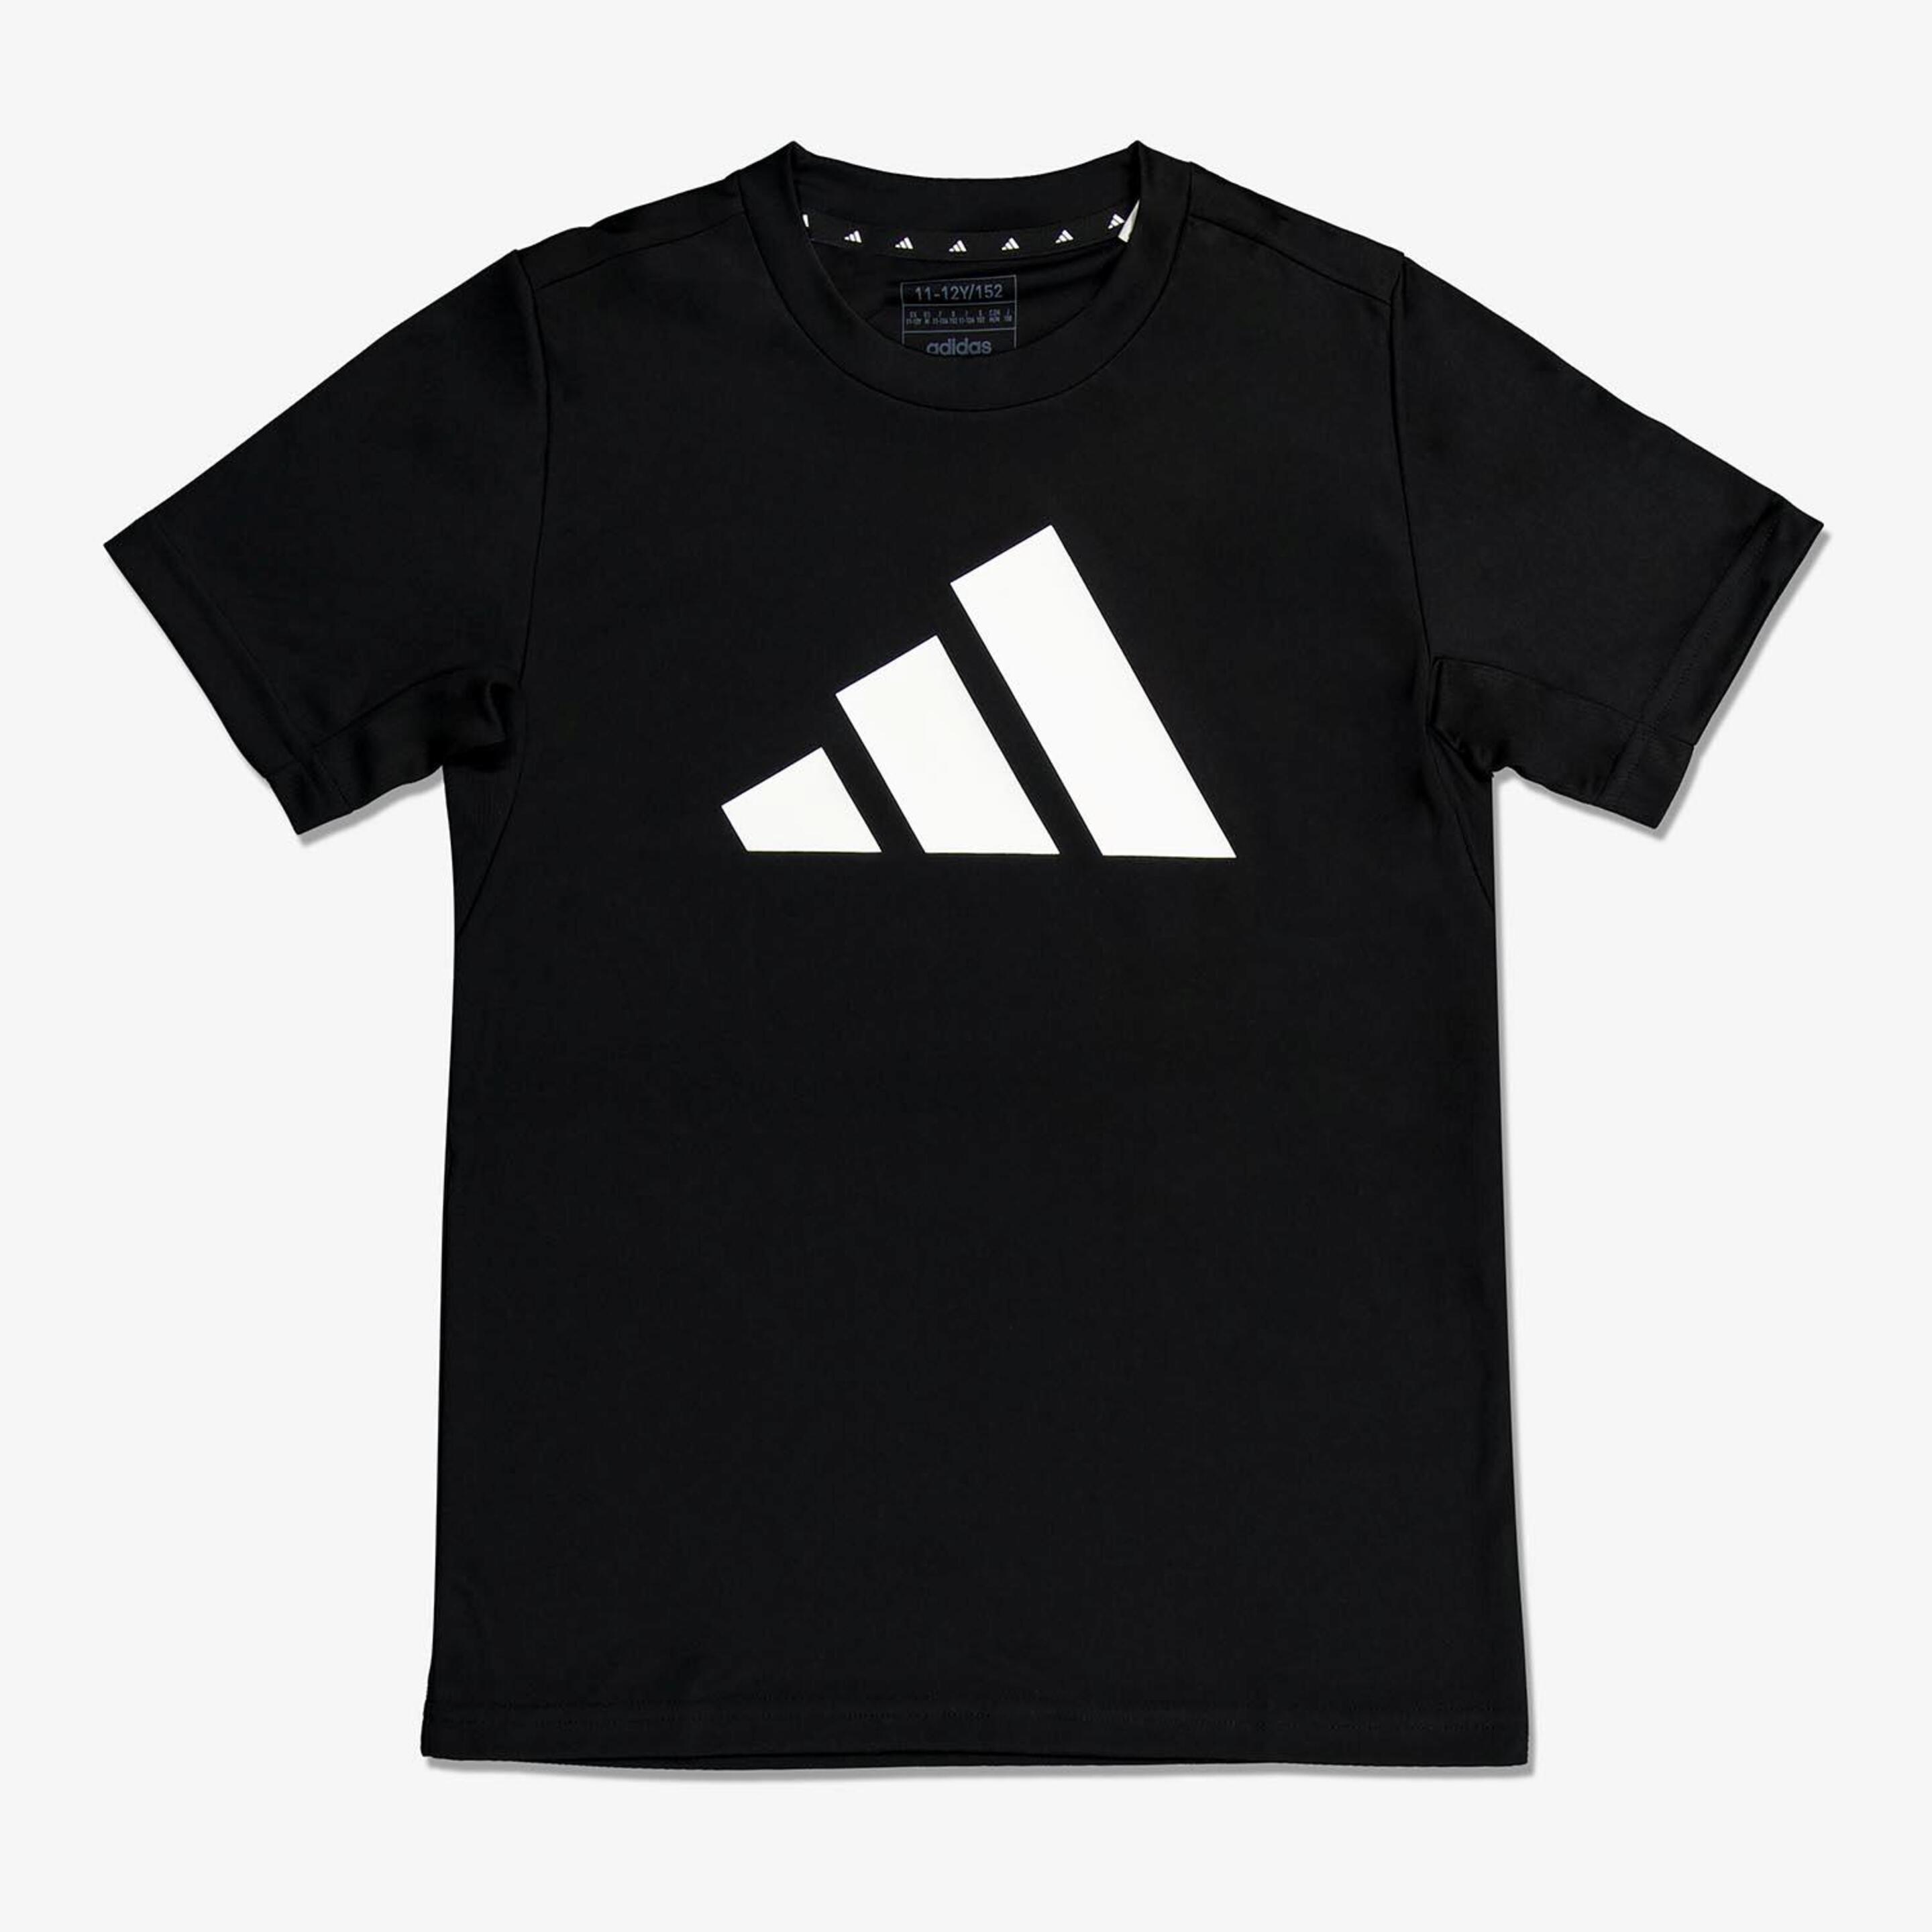 Camiseta adidas - negro - Camiseta Niño